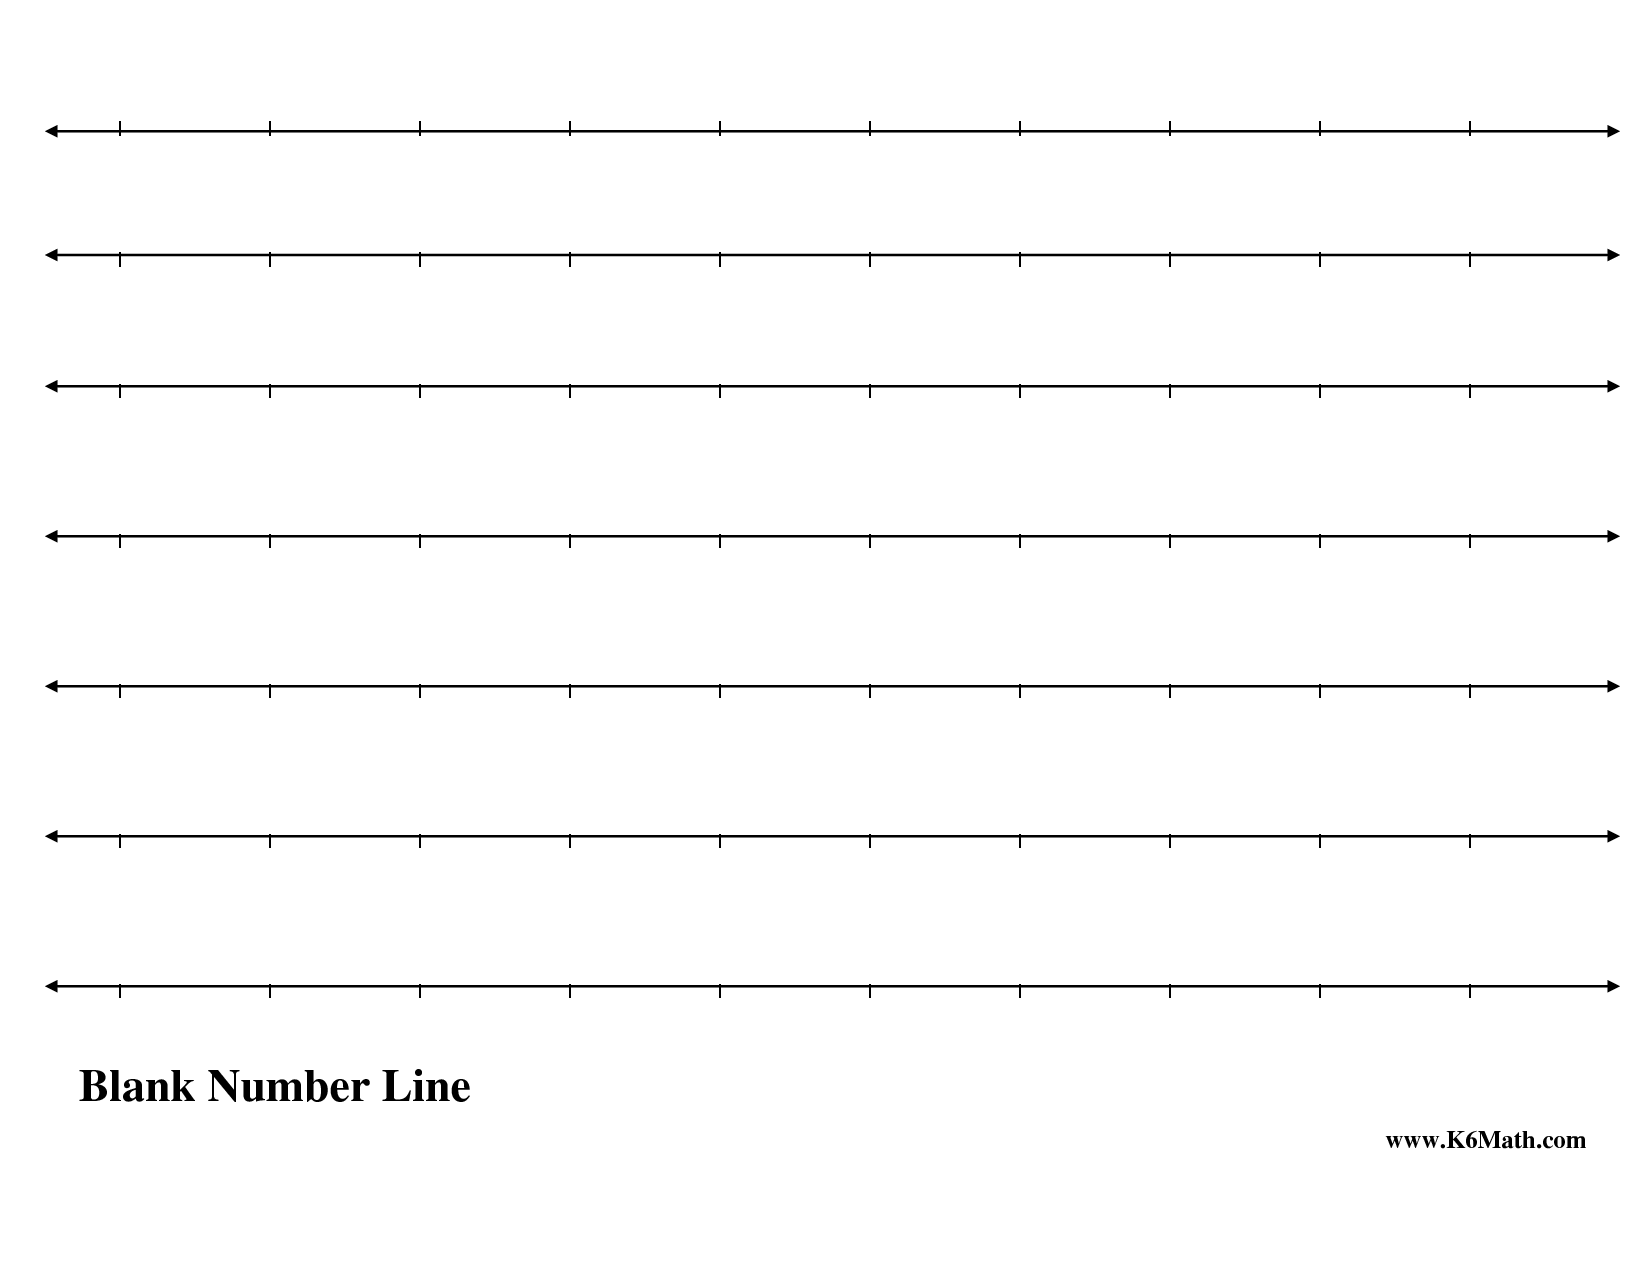 Blank Number Line Paper Image